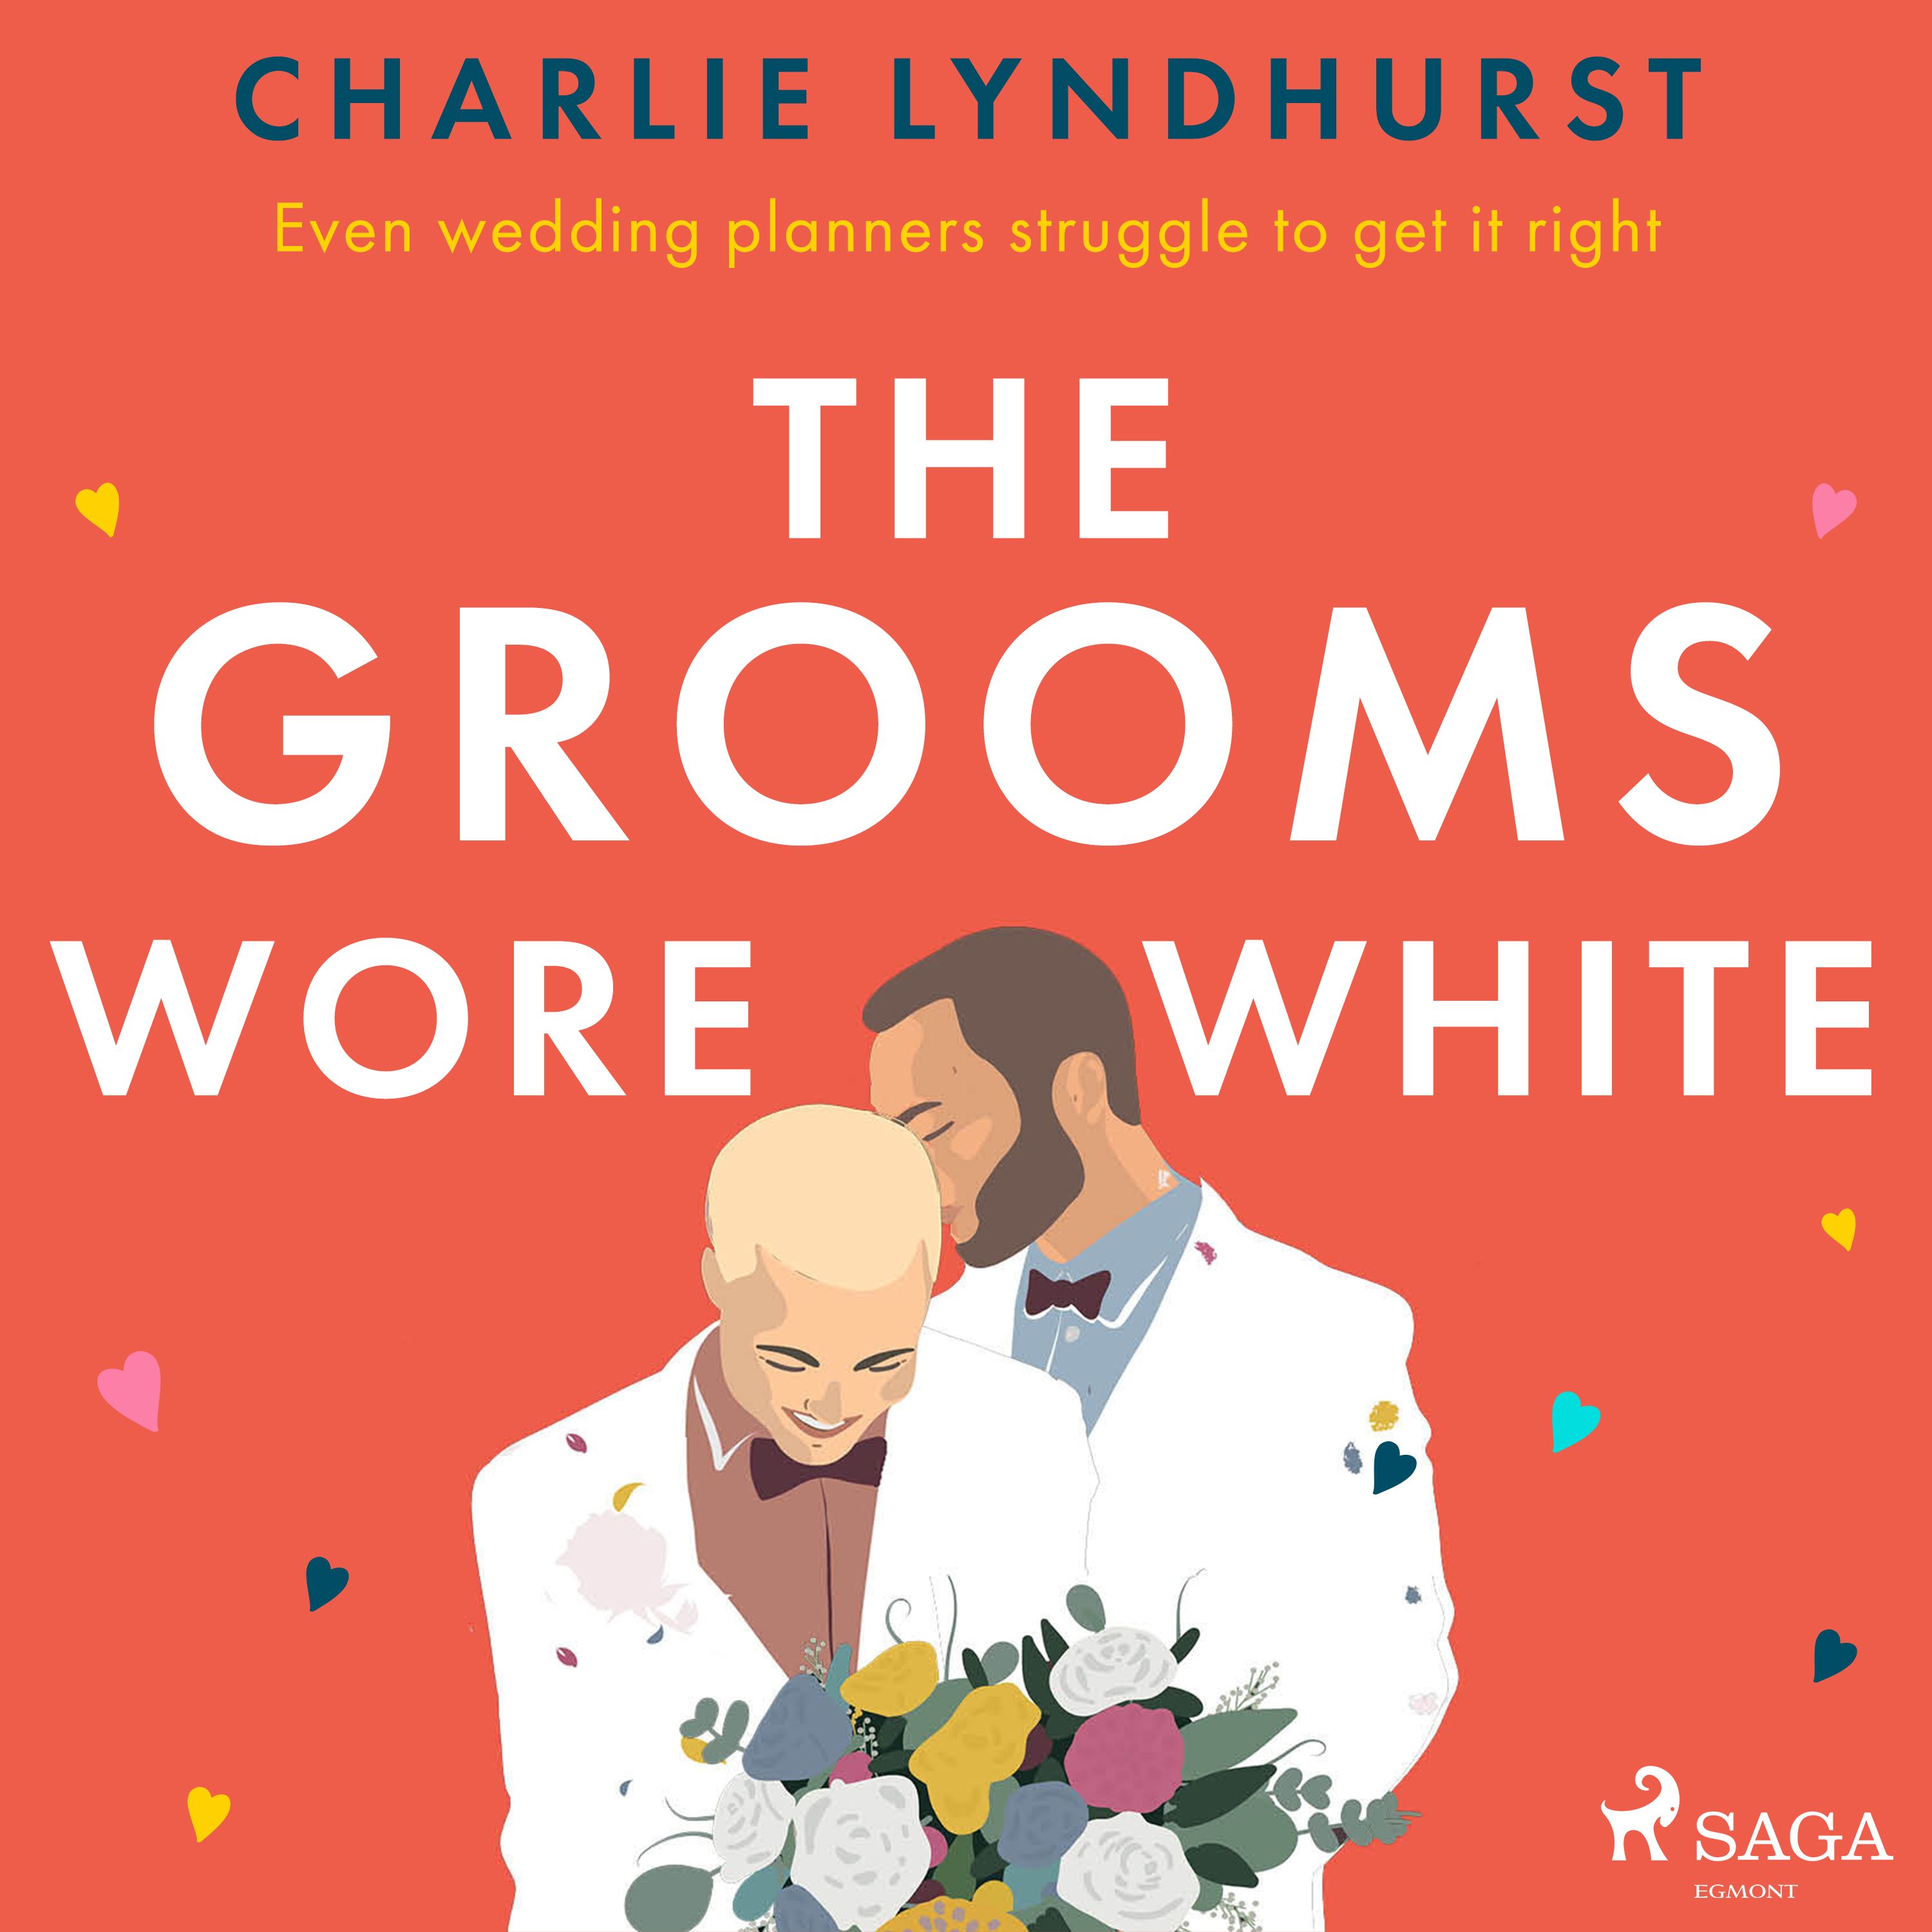 The Grooms Wore White, lydbog af Charlie Lyndhurst